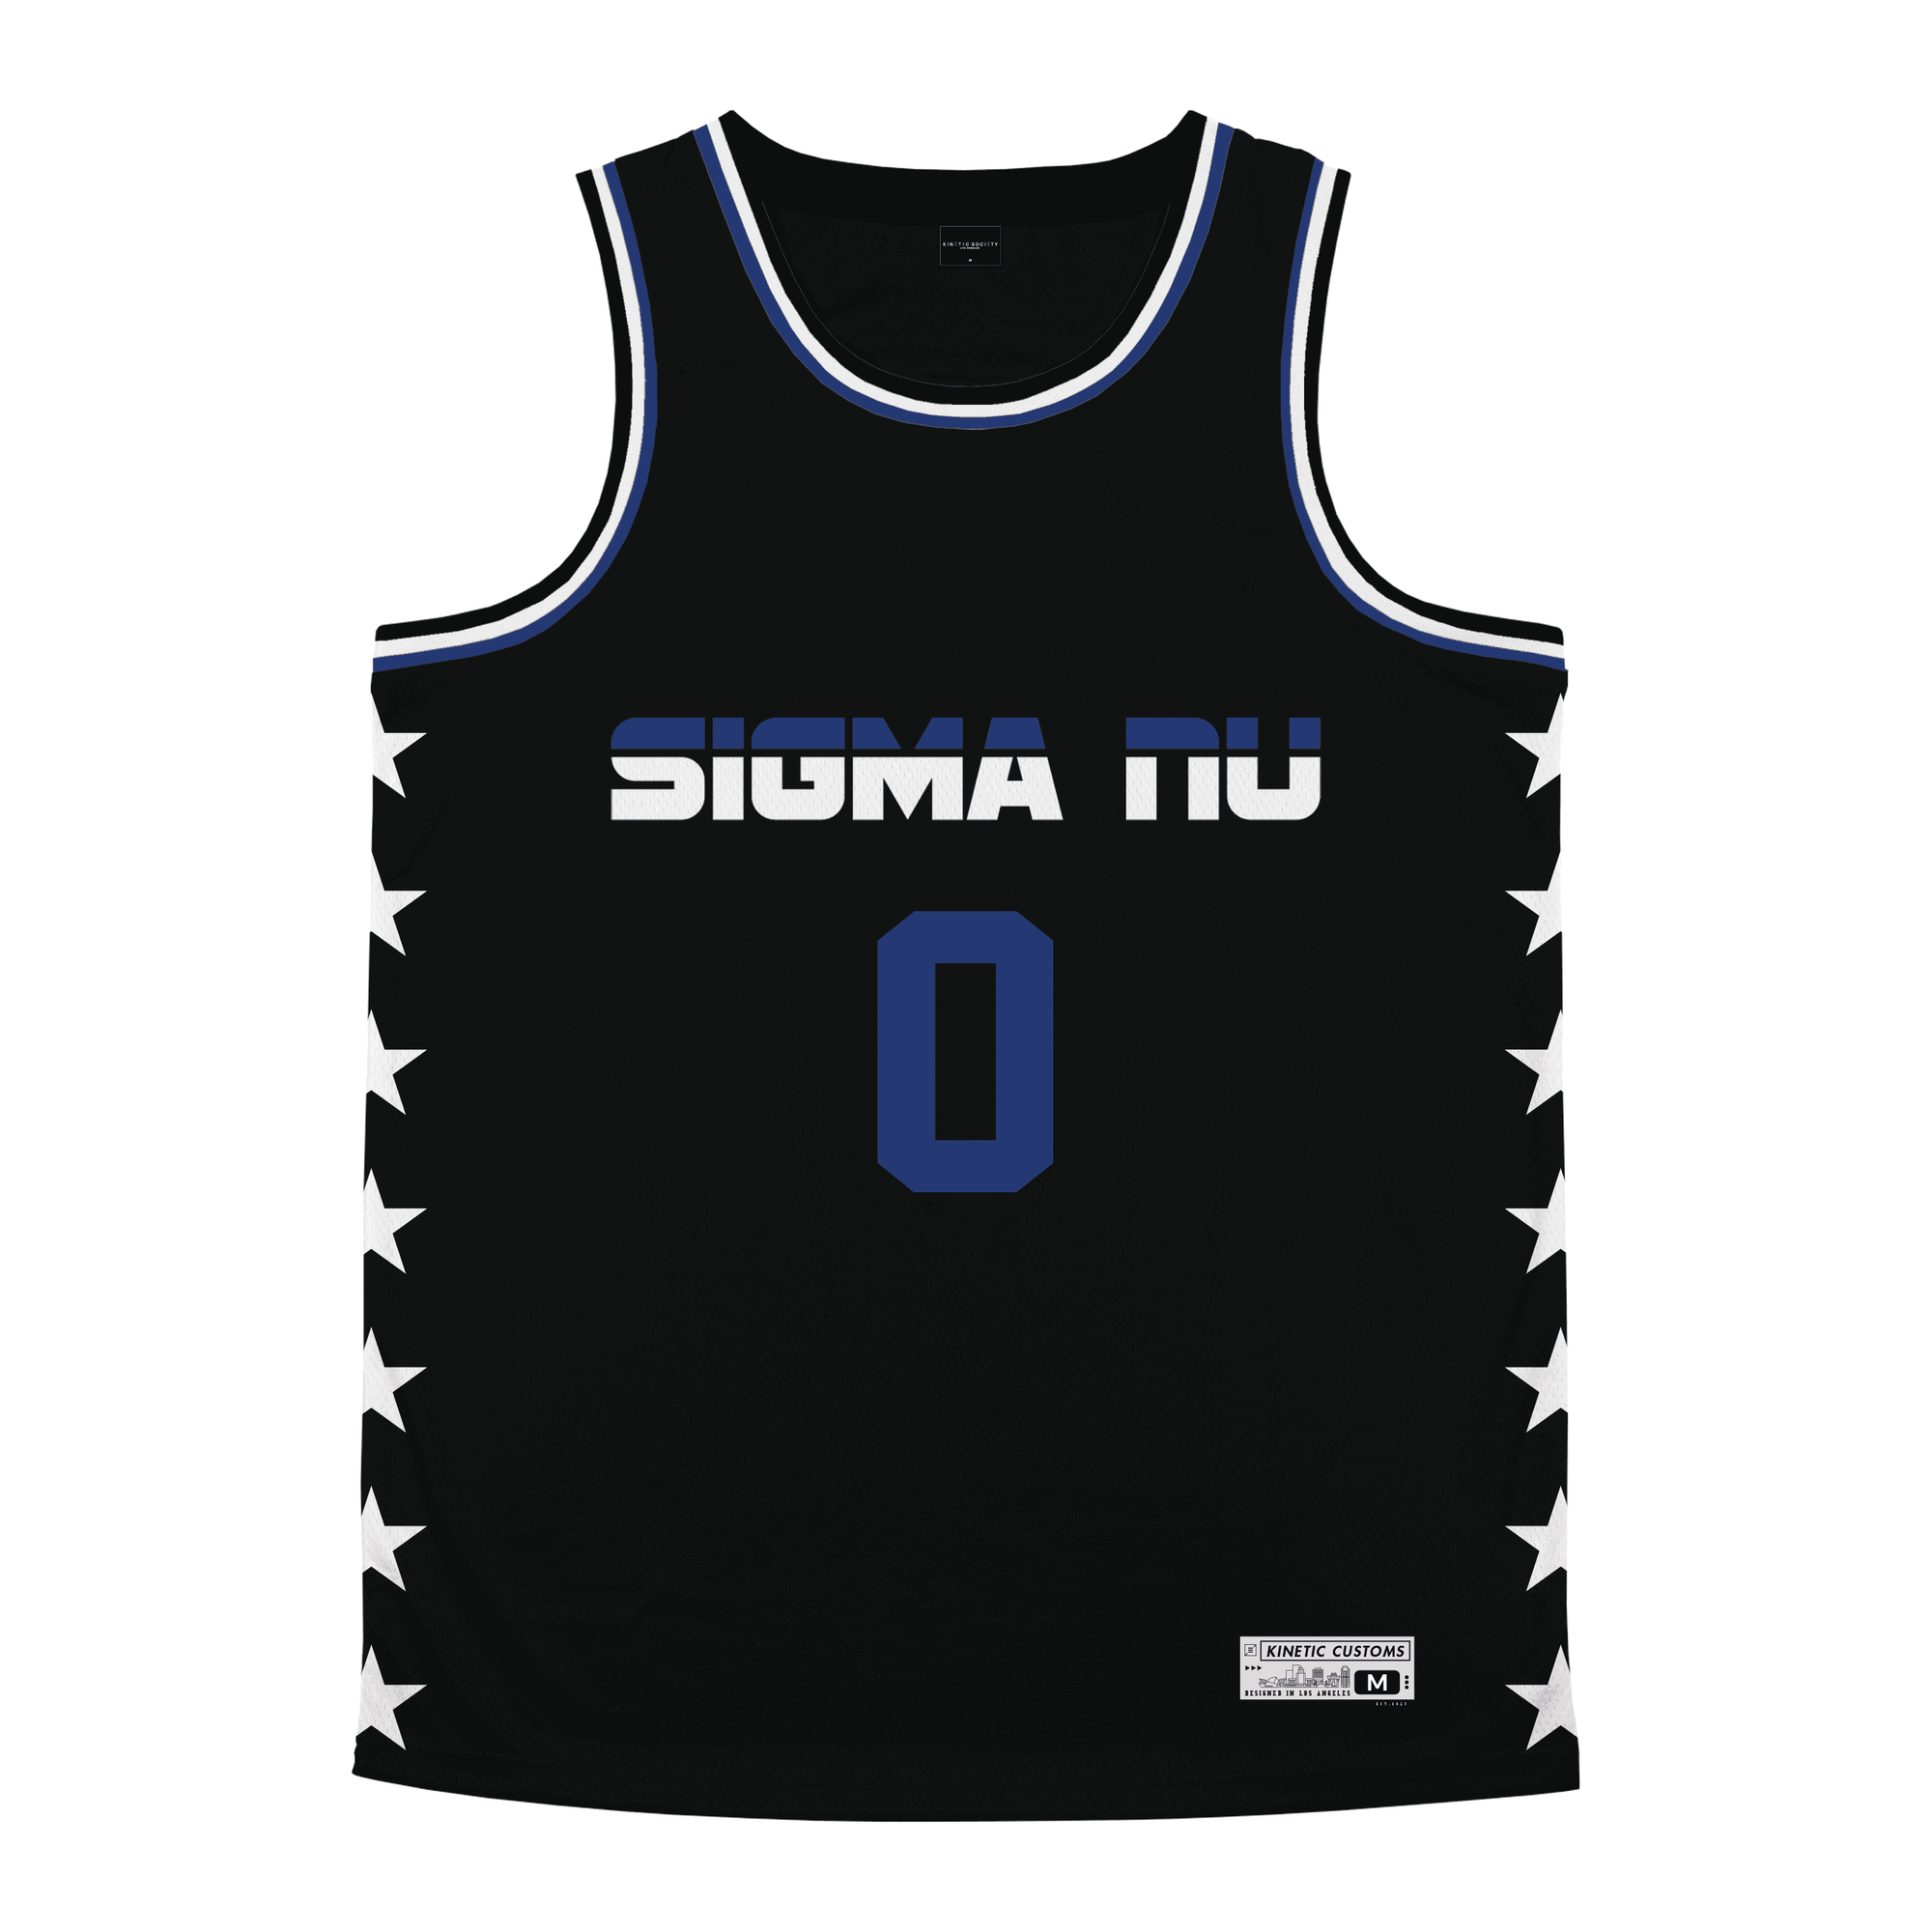 Sigma Nu - Black Star Night Mode Basketball Jersey